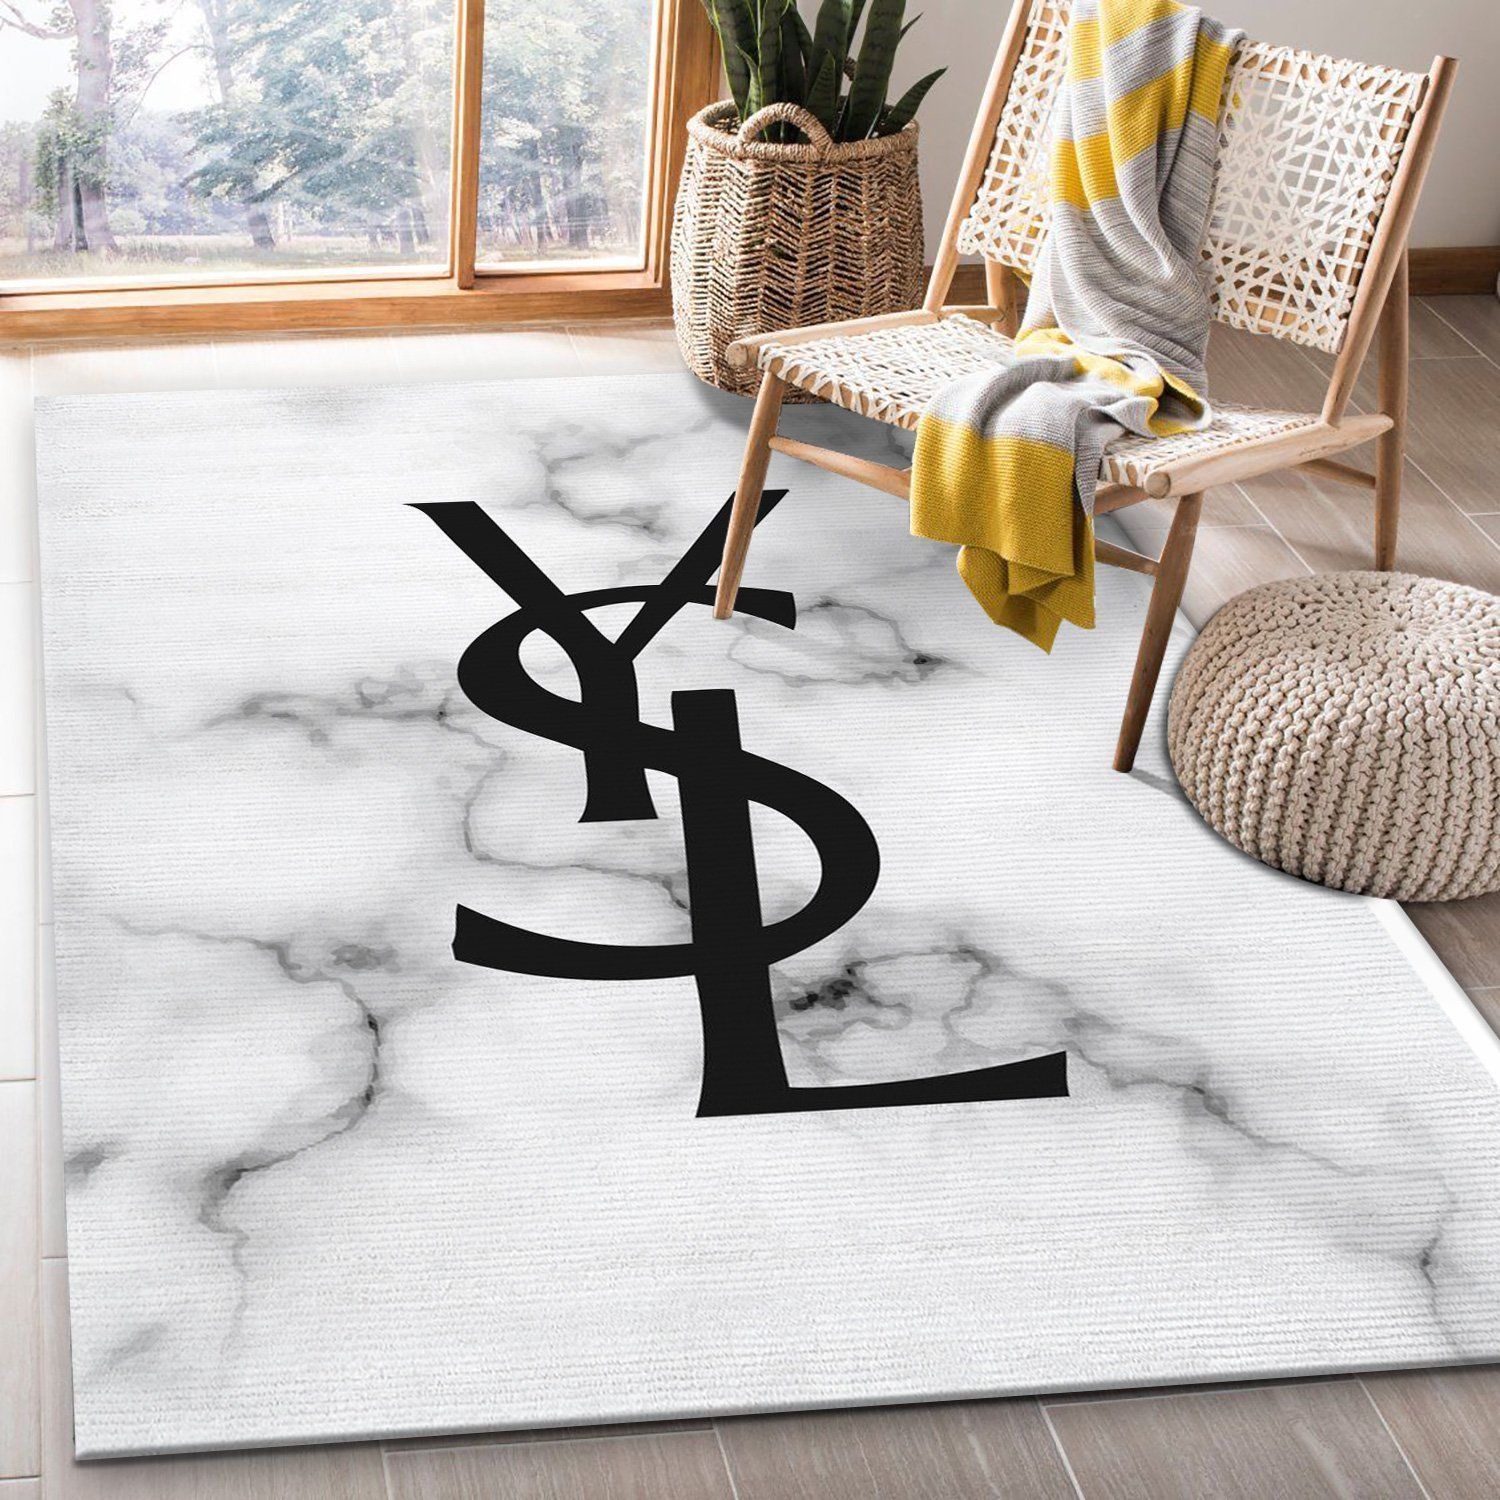 Ysl Yves Saint Laurent Rectangle Rug Fashion Brand Rug Christmas Gift US Decor - Indoor Outdoor Rugs